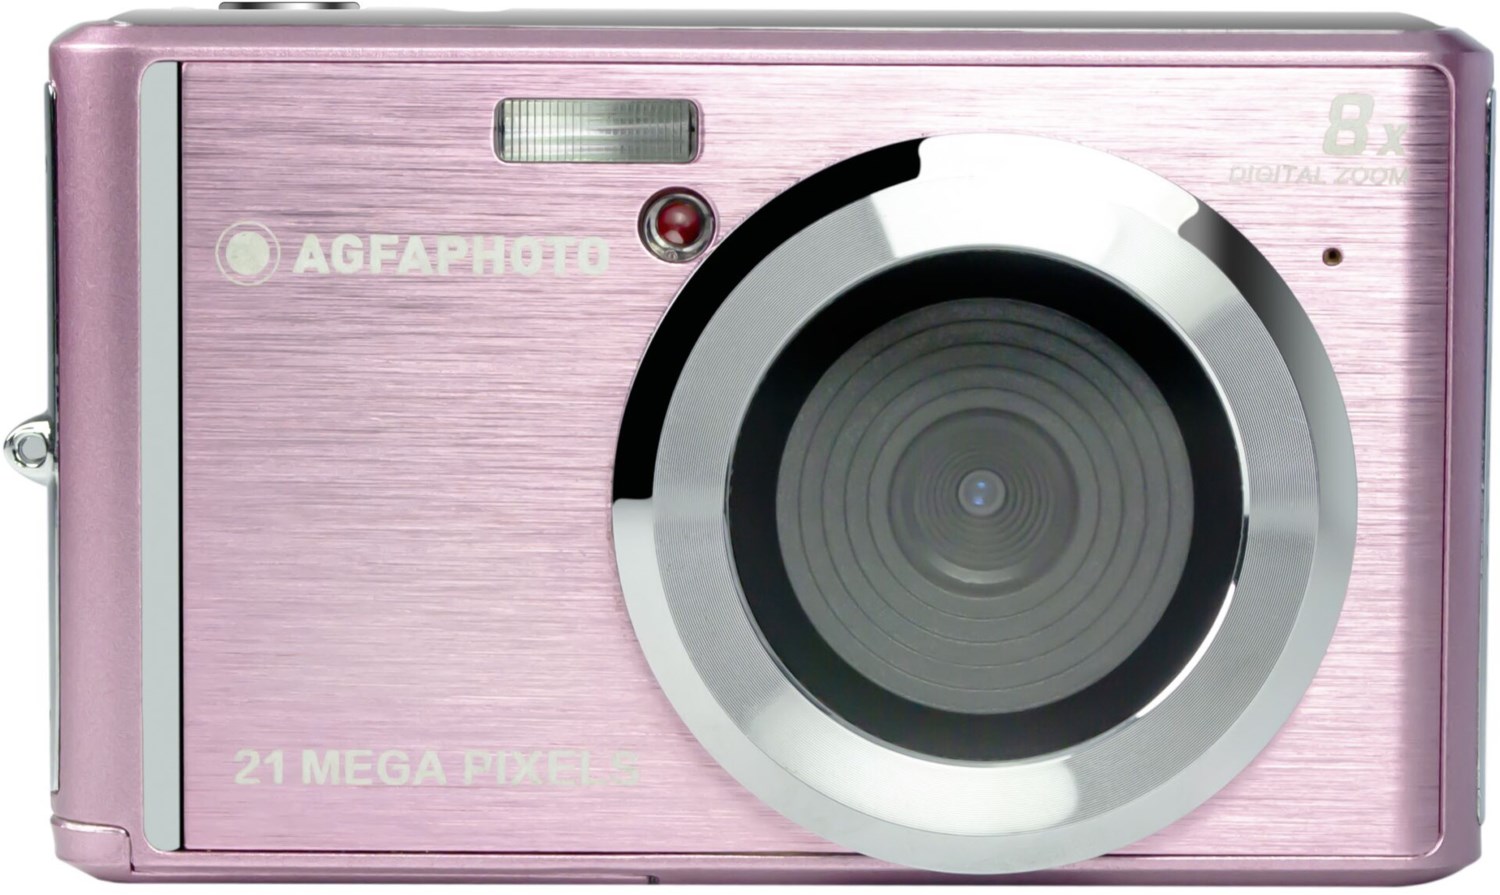 Realishot DC5200 Digitale Kompaktkamera pink